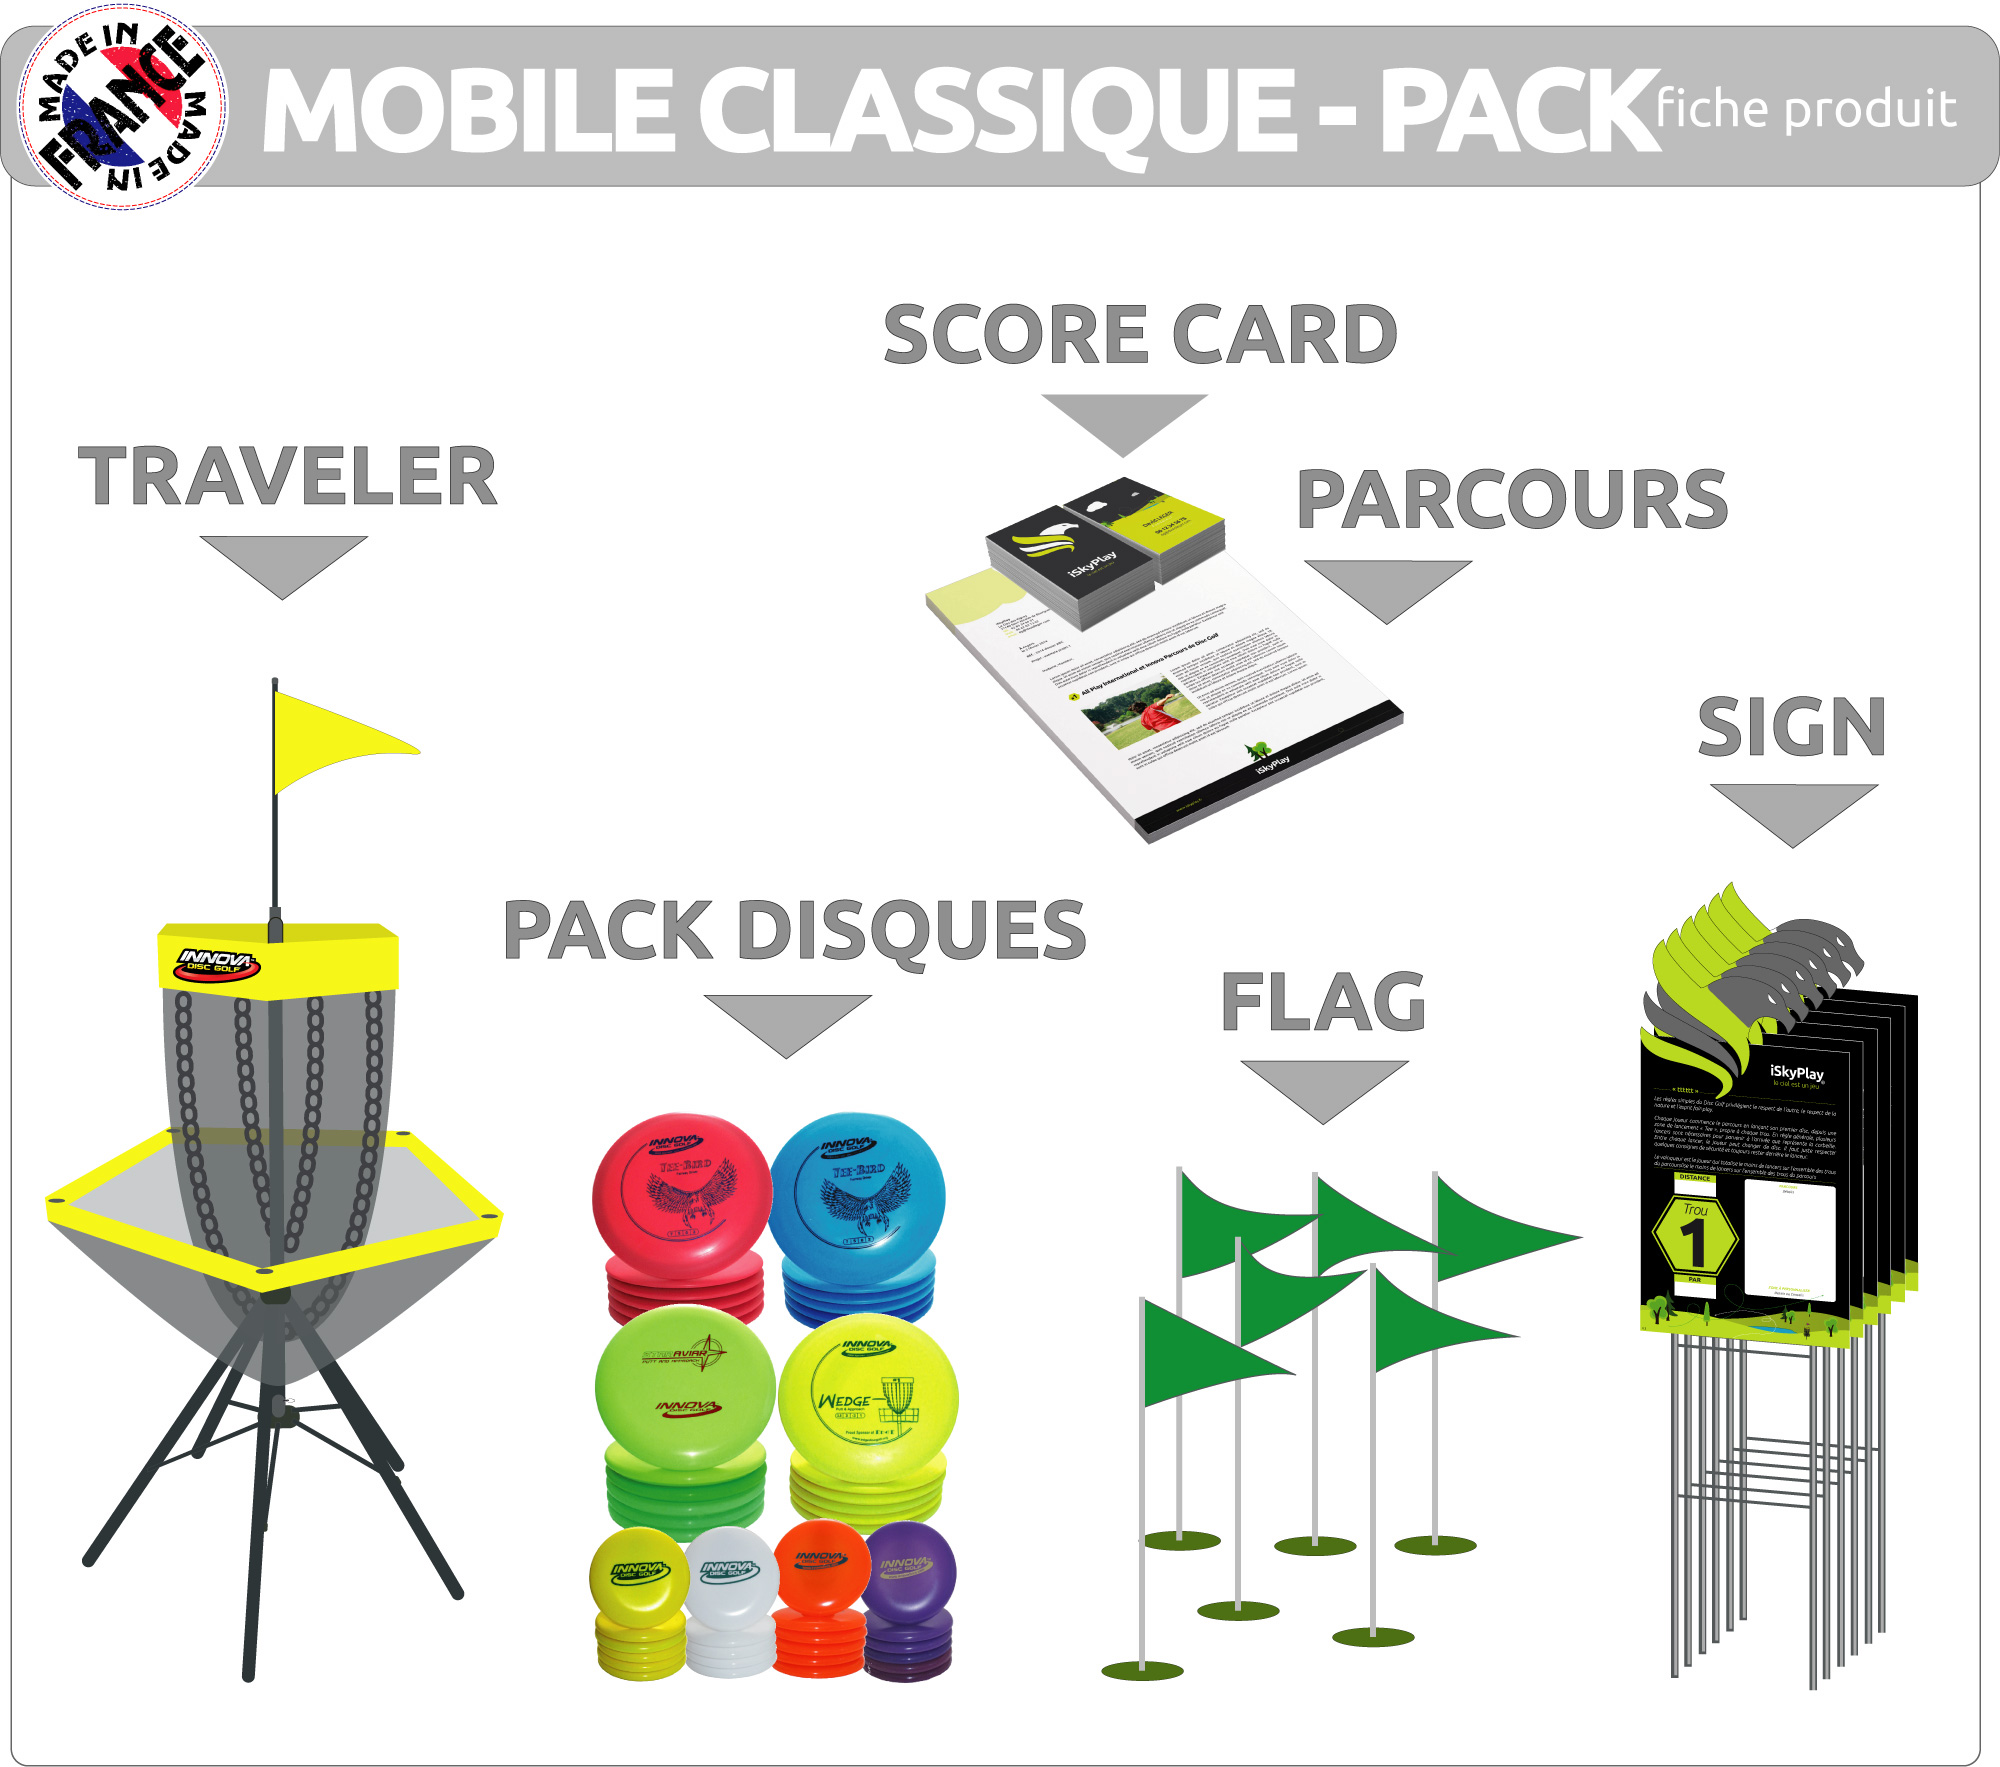 1-MobileClassique-FicheTec-a.jpg